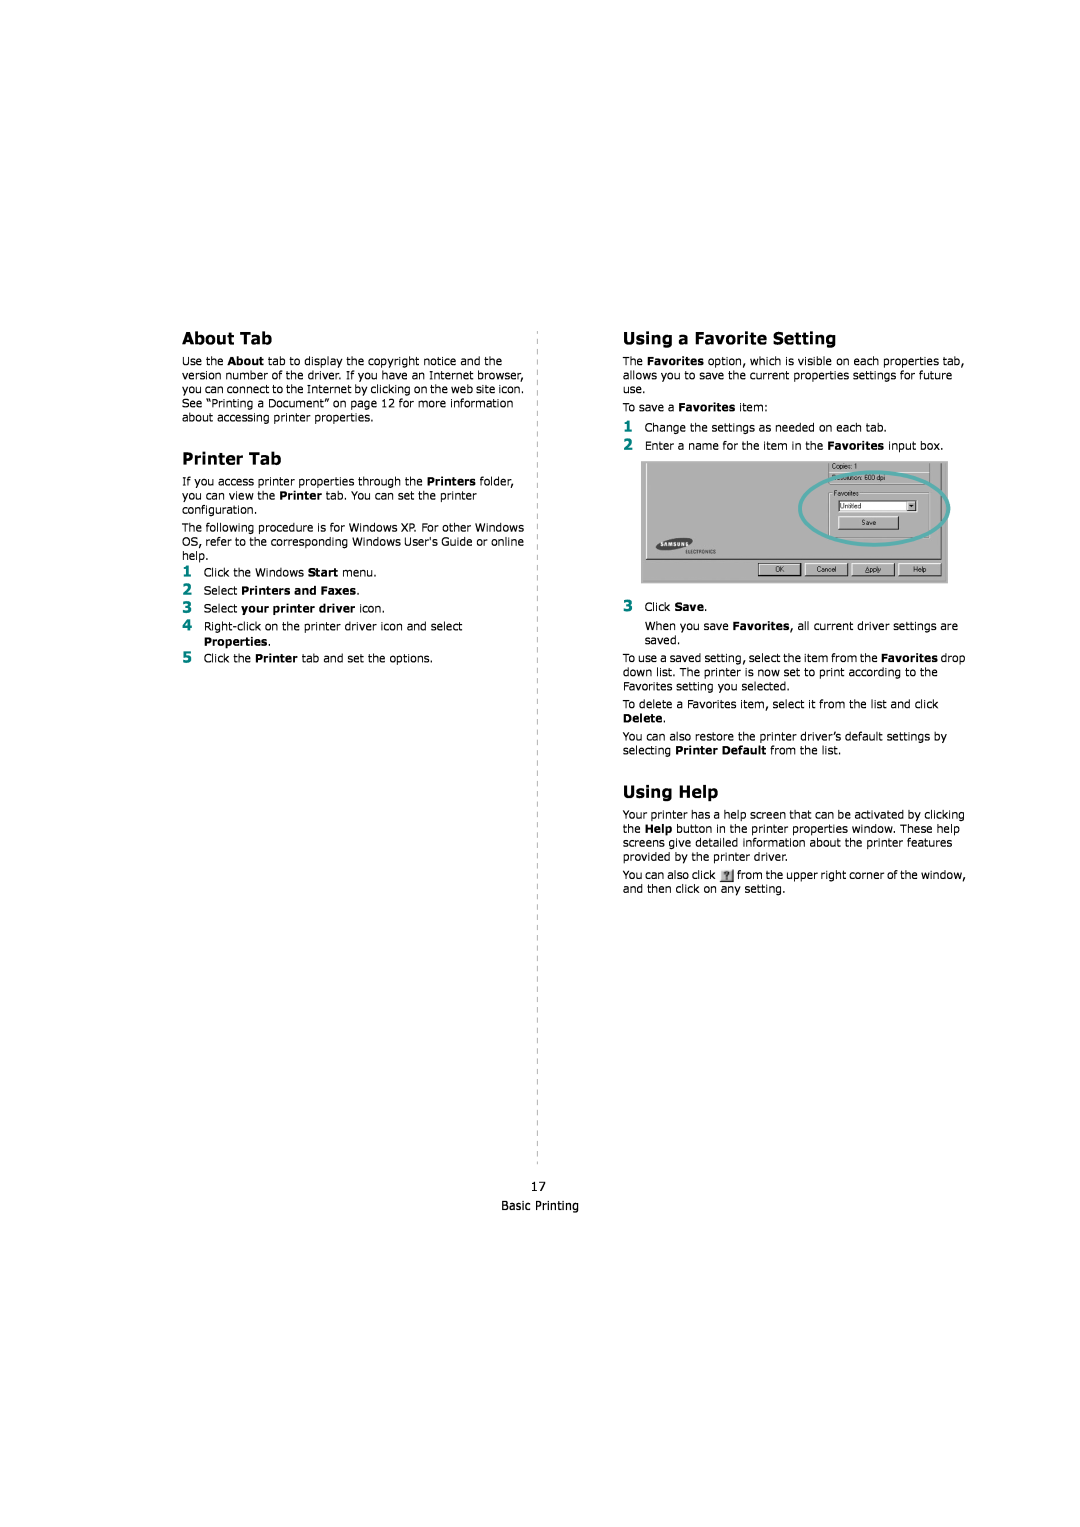 Samsung ML-4551ND, ML-4550 manual About Tab, Printer Tab, Using a Favorite Setting, Using Help, Properties 